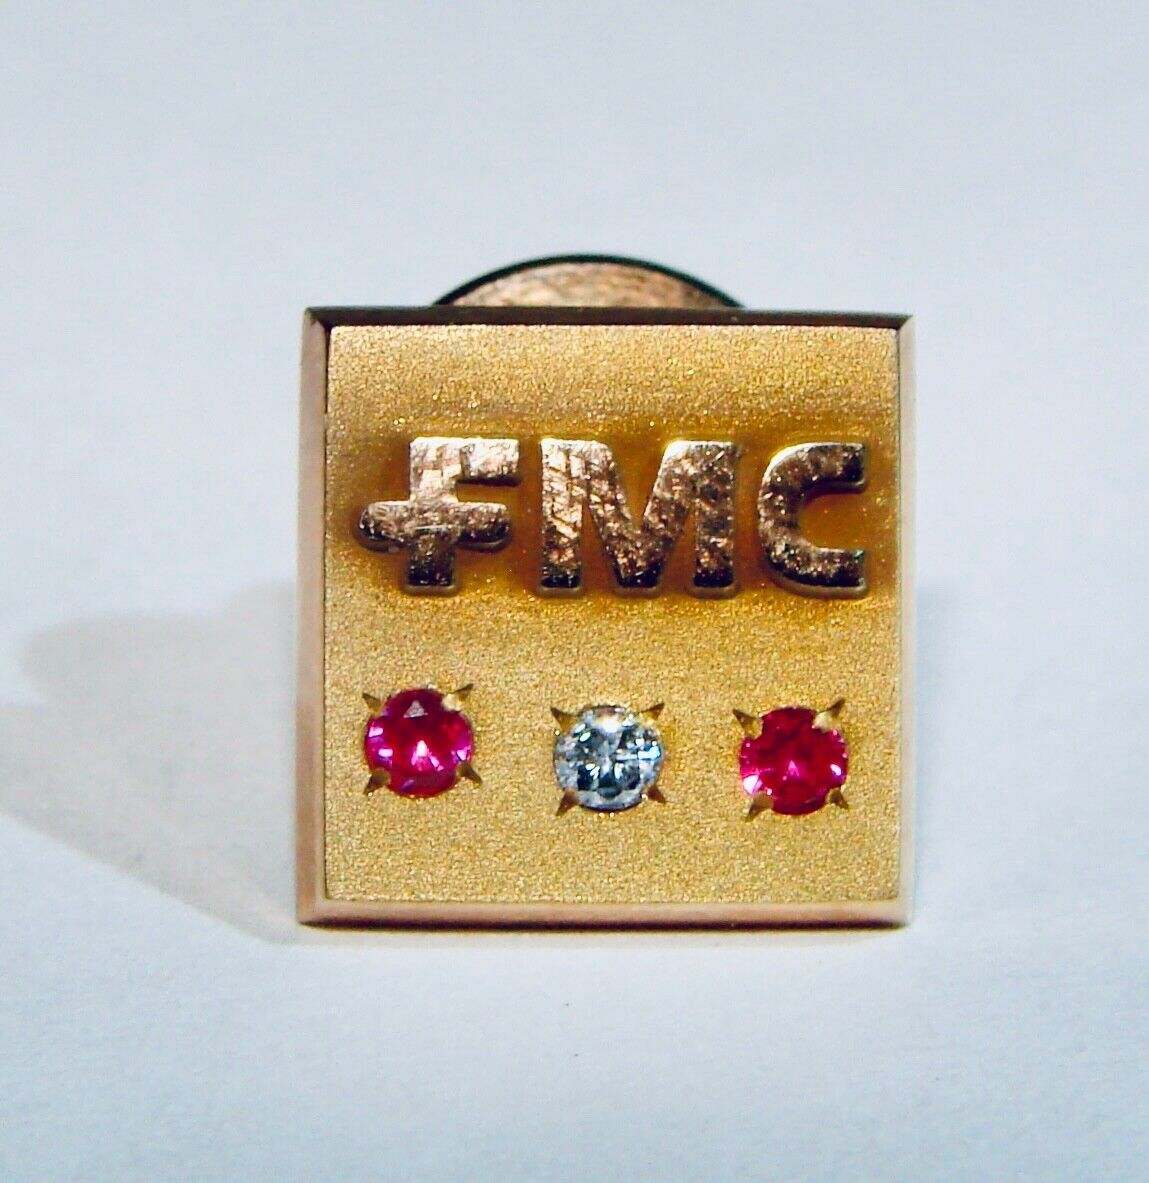 FMC Employee Service Award Pin 10K Gold Food Machinery Corporation Vintage TIE